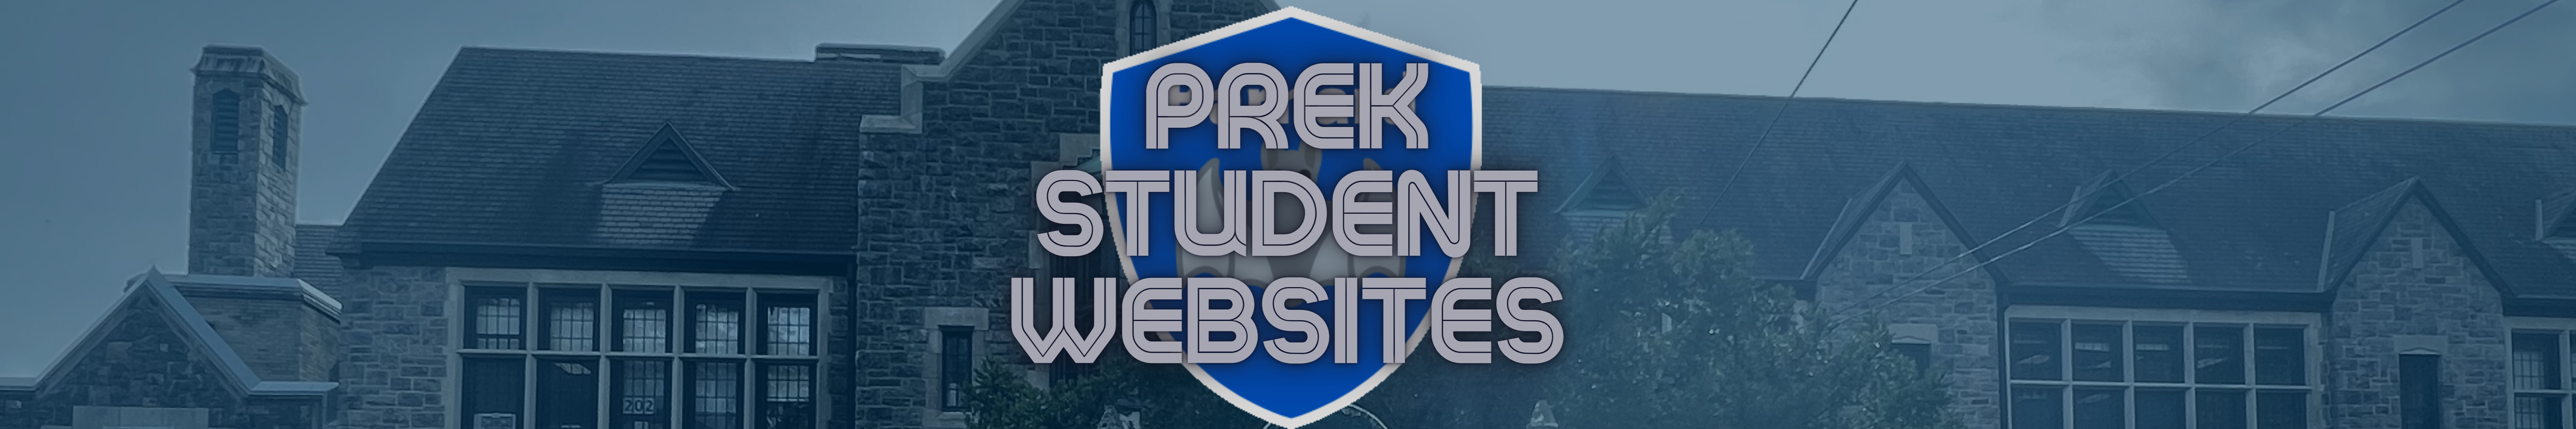 PreK Student Websites banner